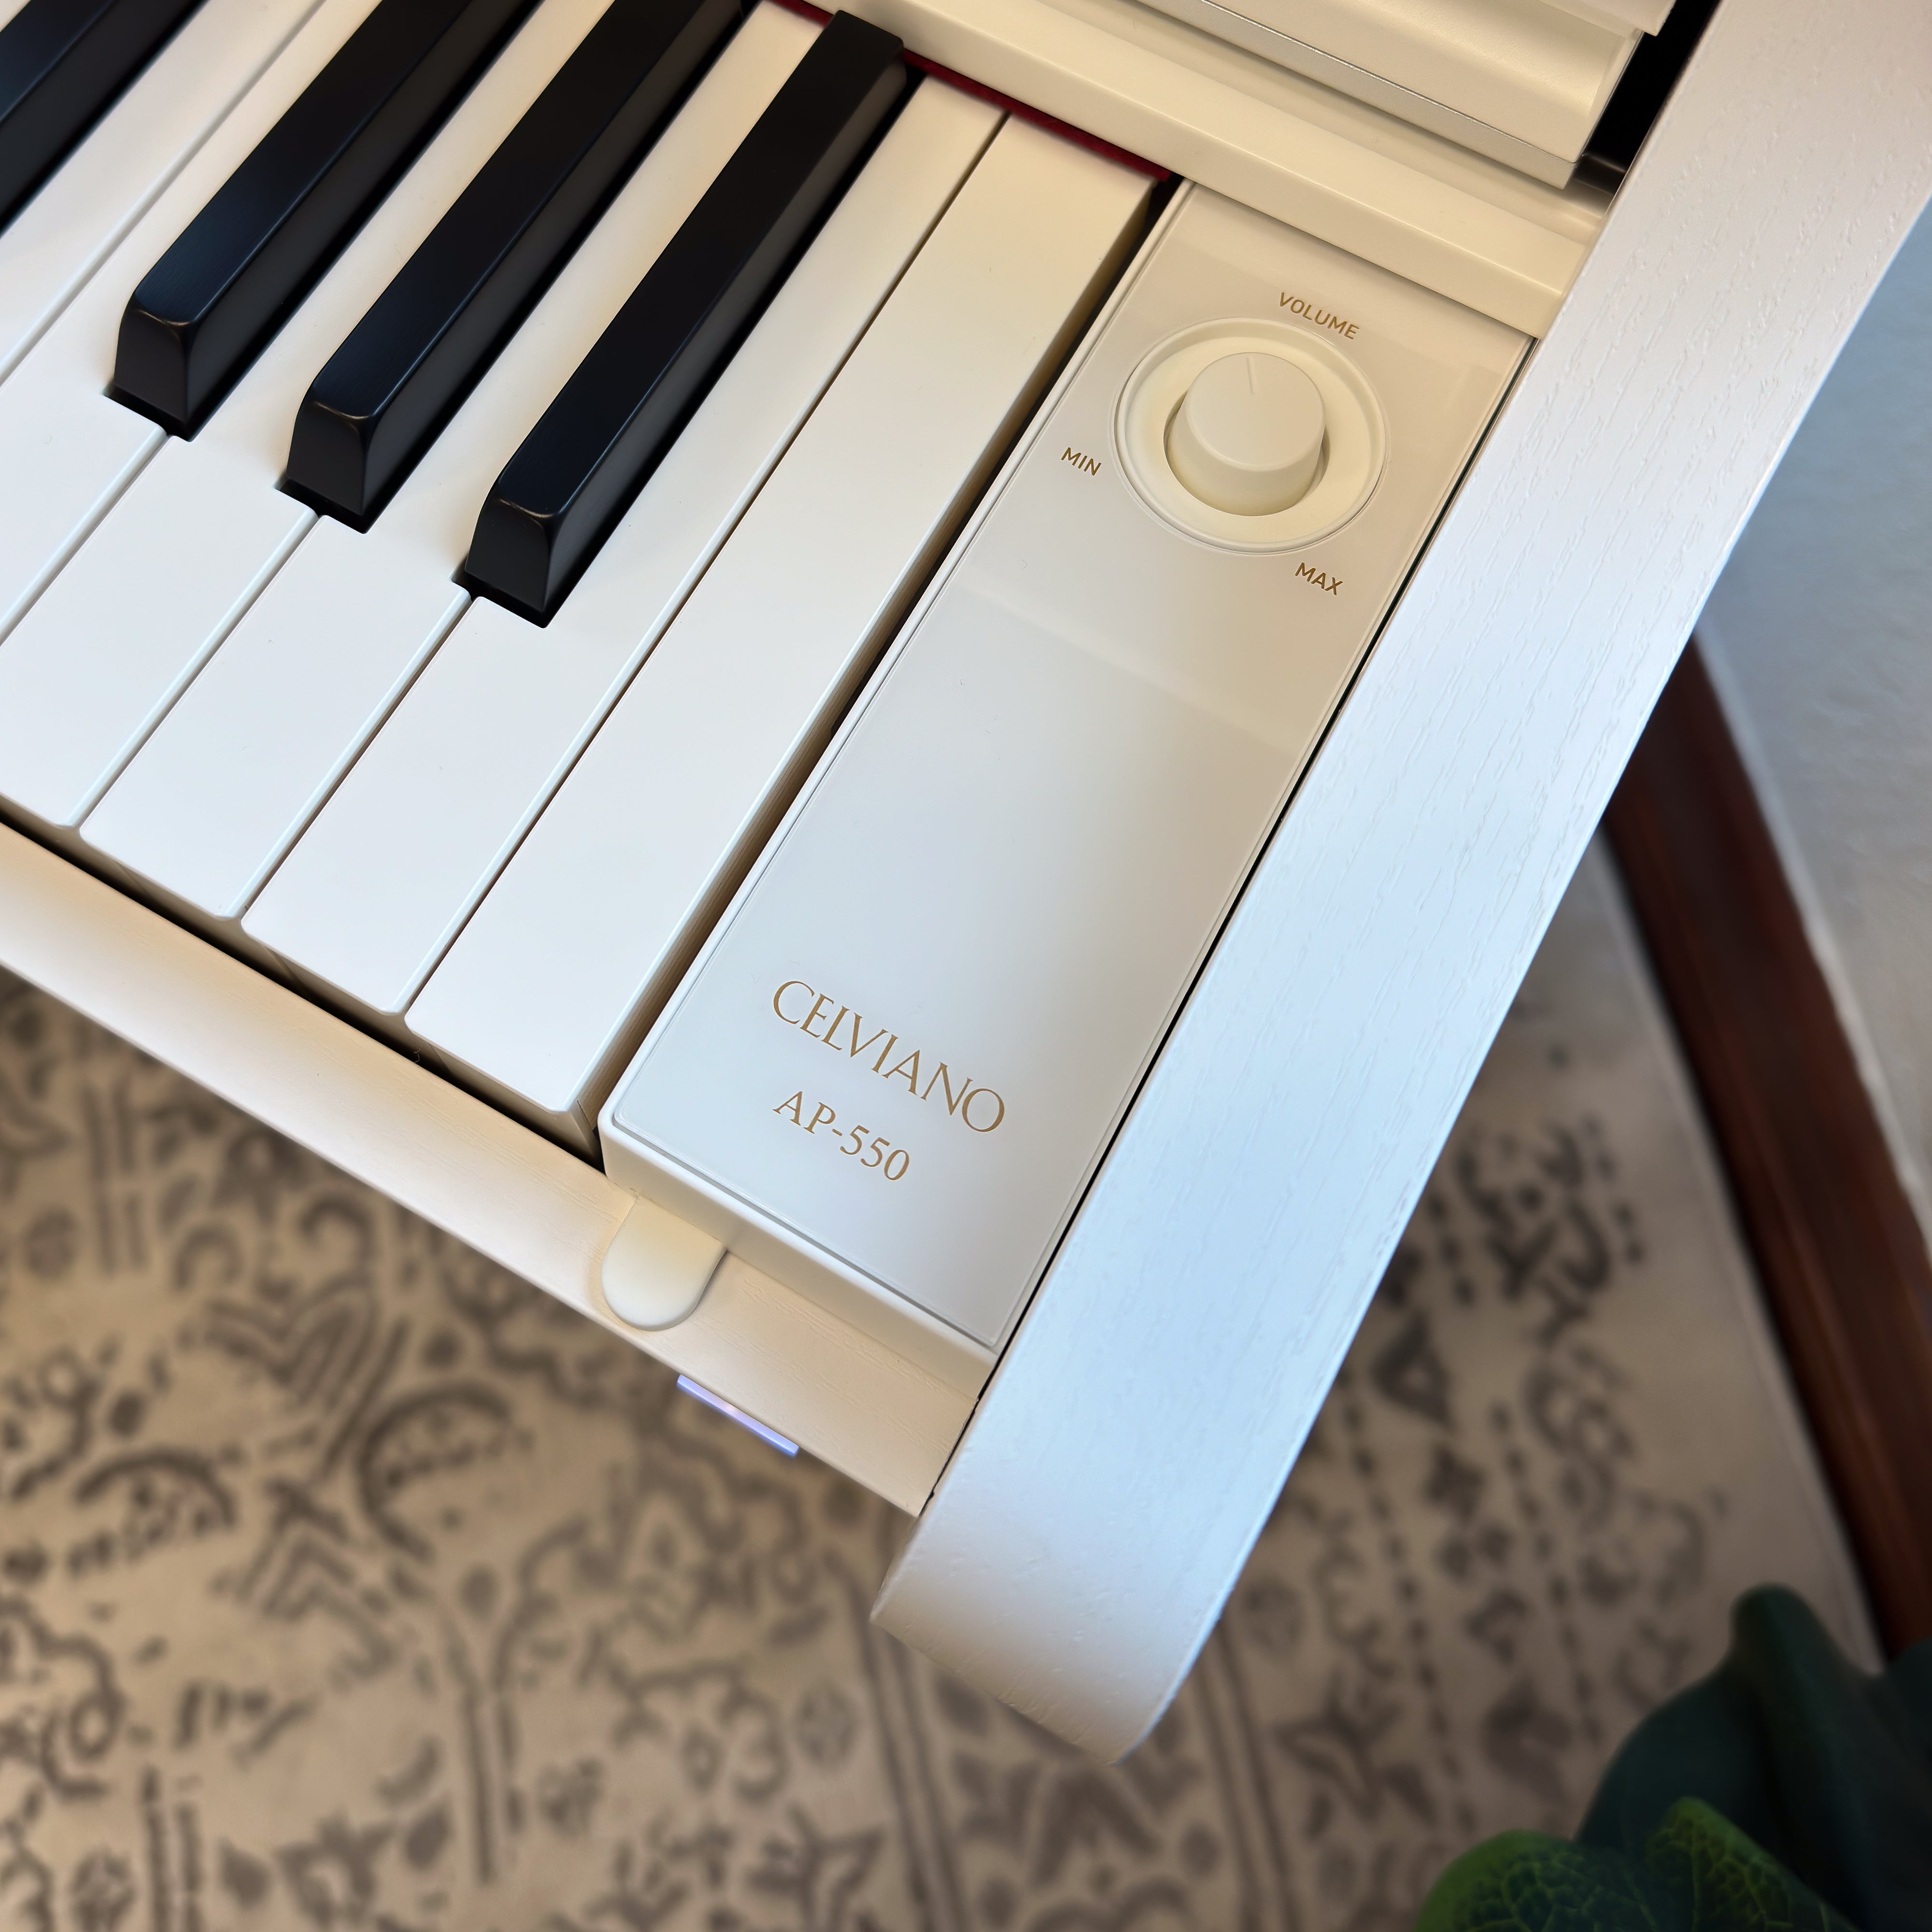 Casio Celviano AP-550 Digital Piano - White - view 10